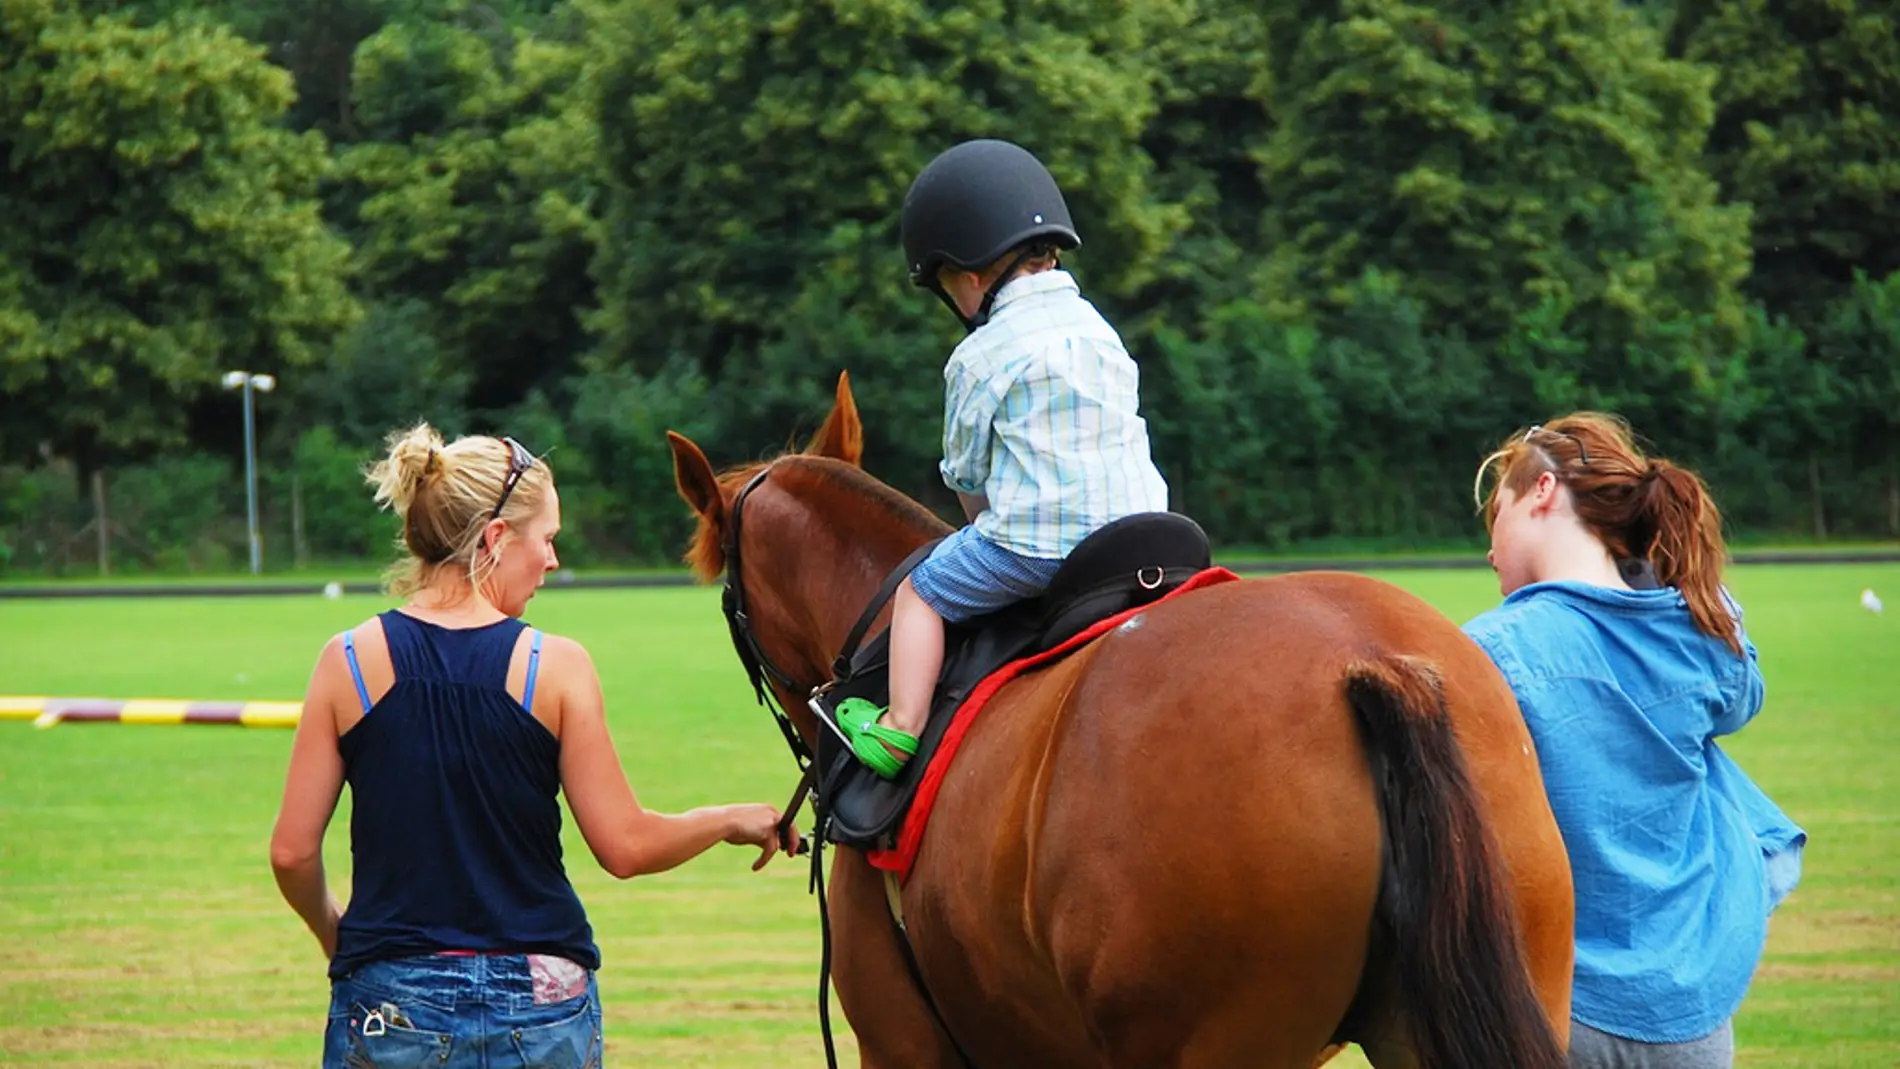 Montar a caballo es una terapia compleme